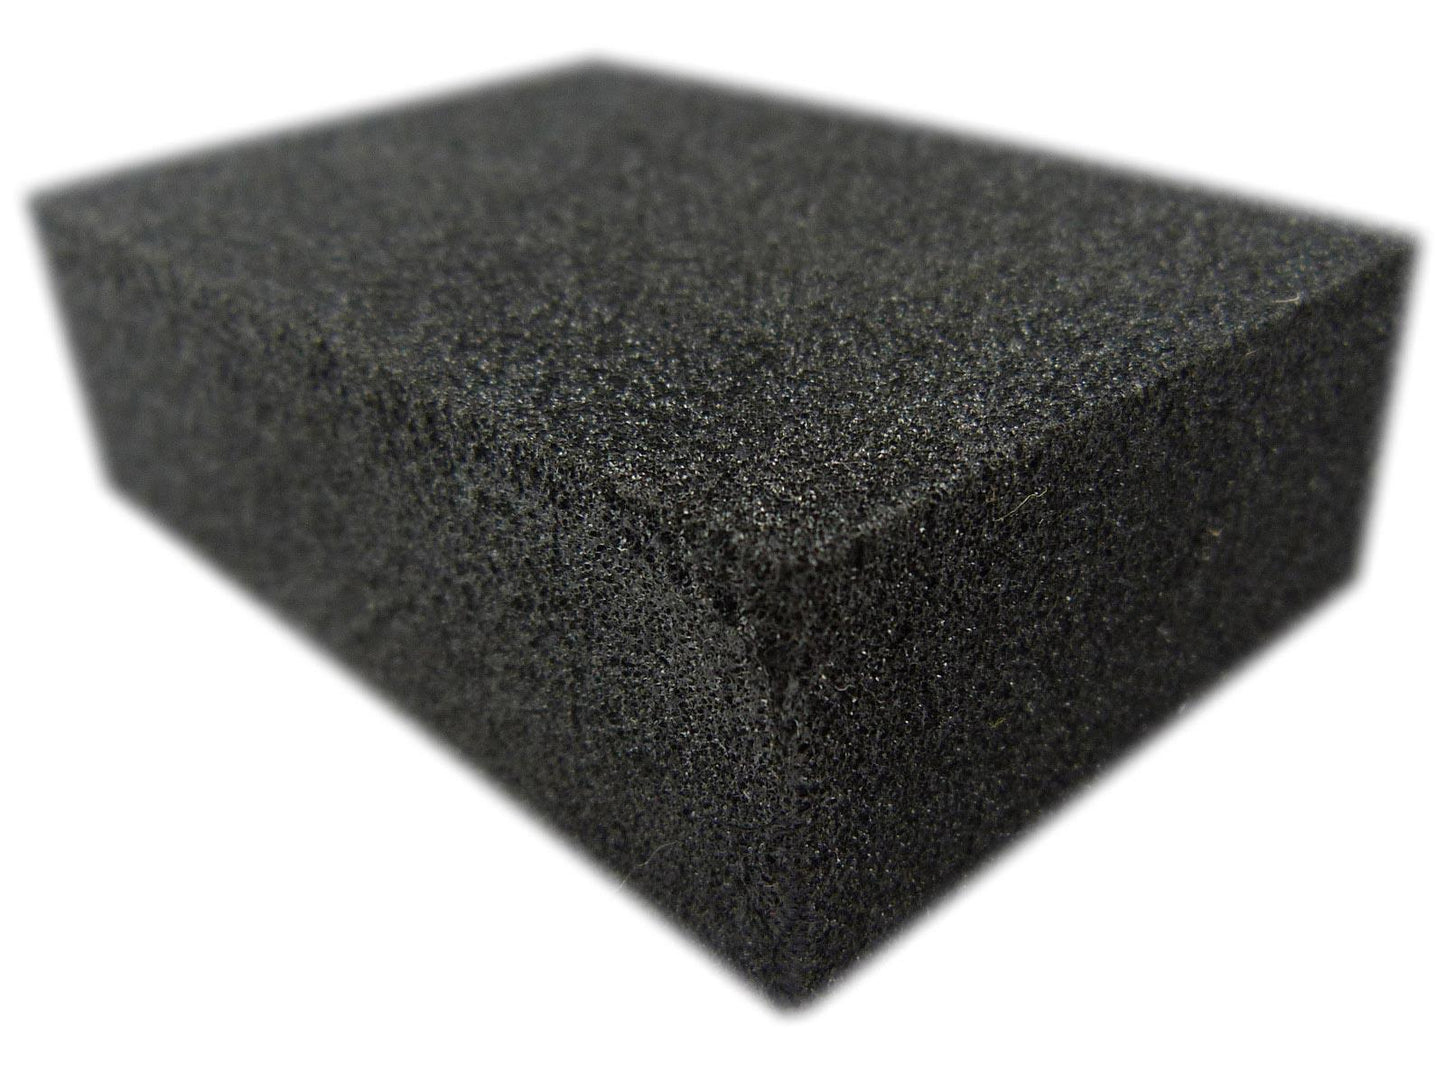 dartfords Sanding Block - 75x50x25mm (3x1.97x0.98")